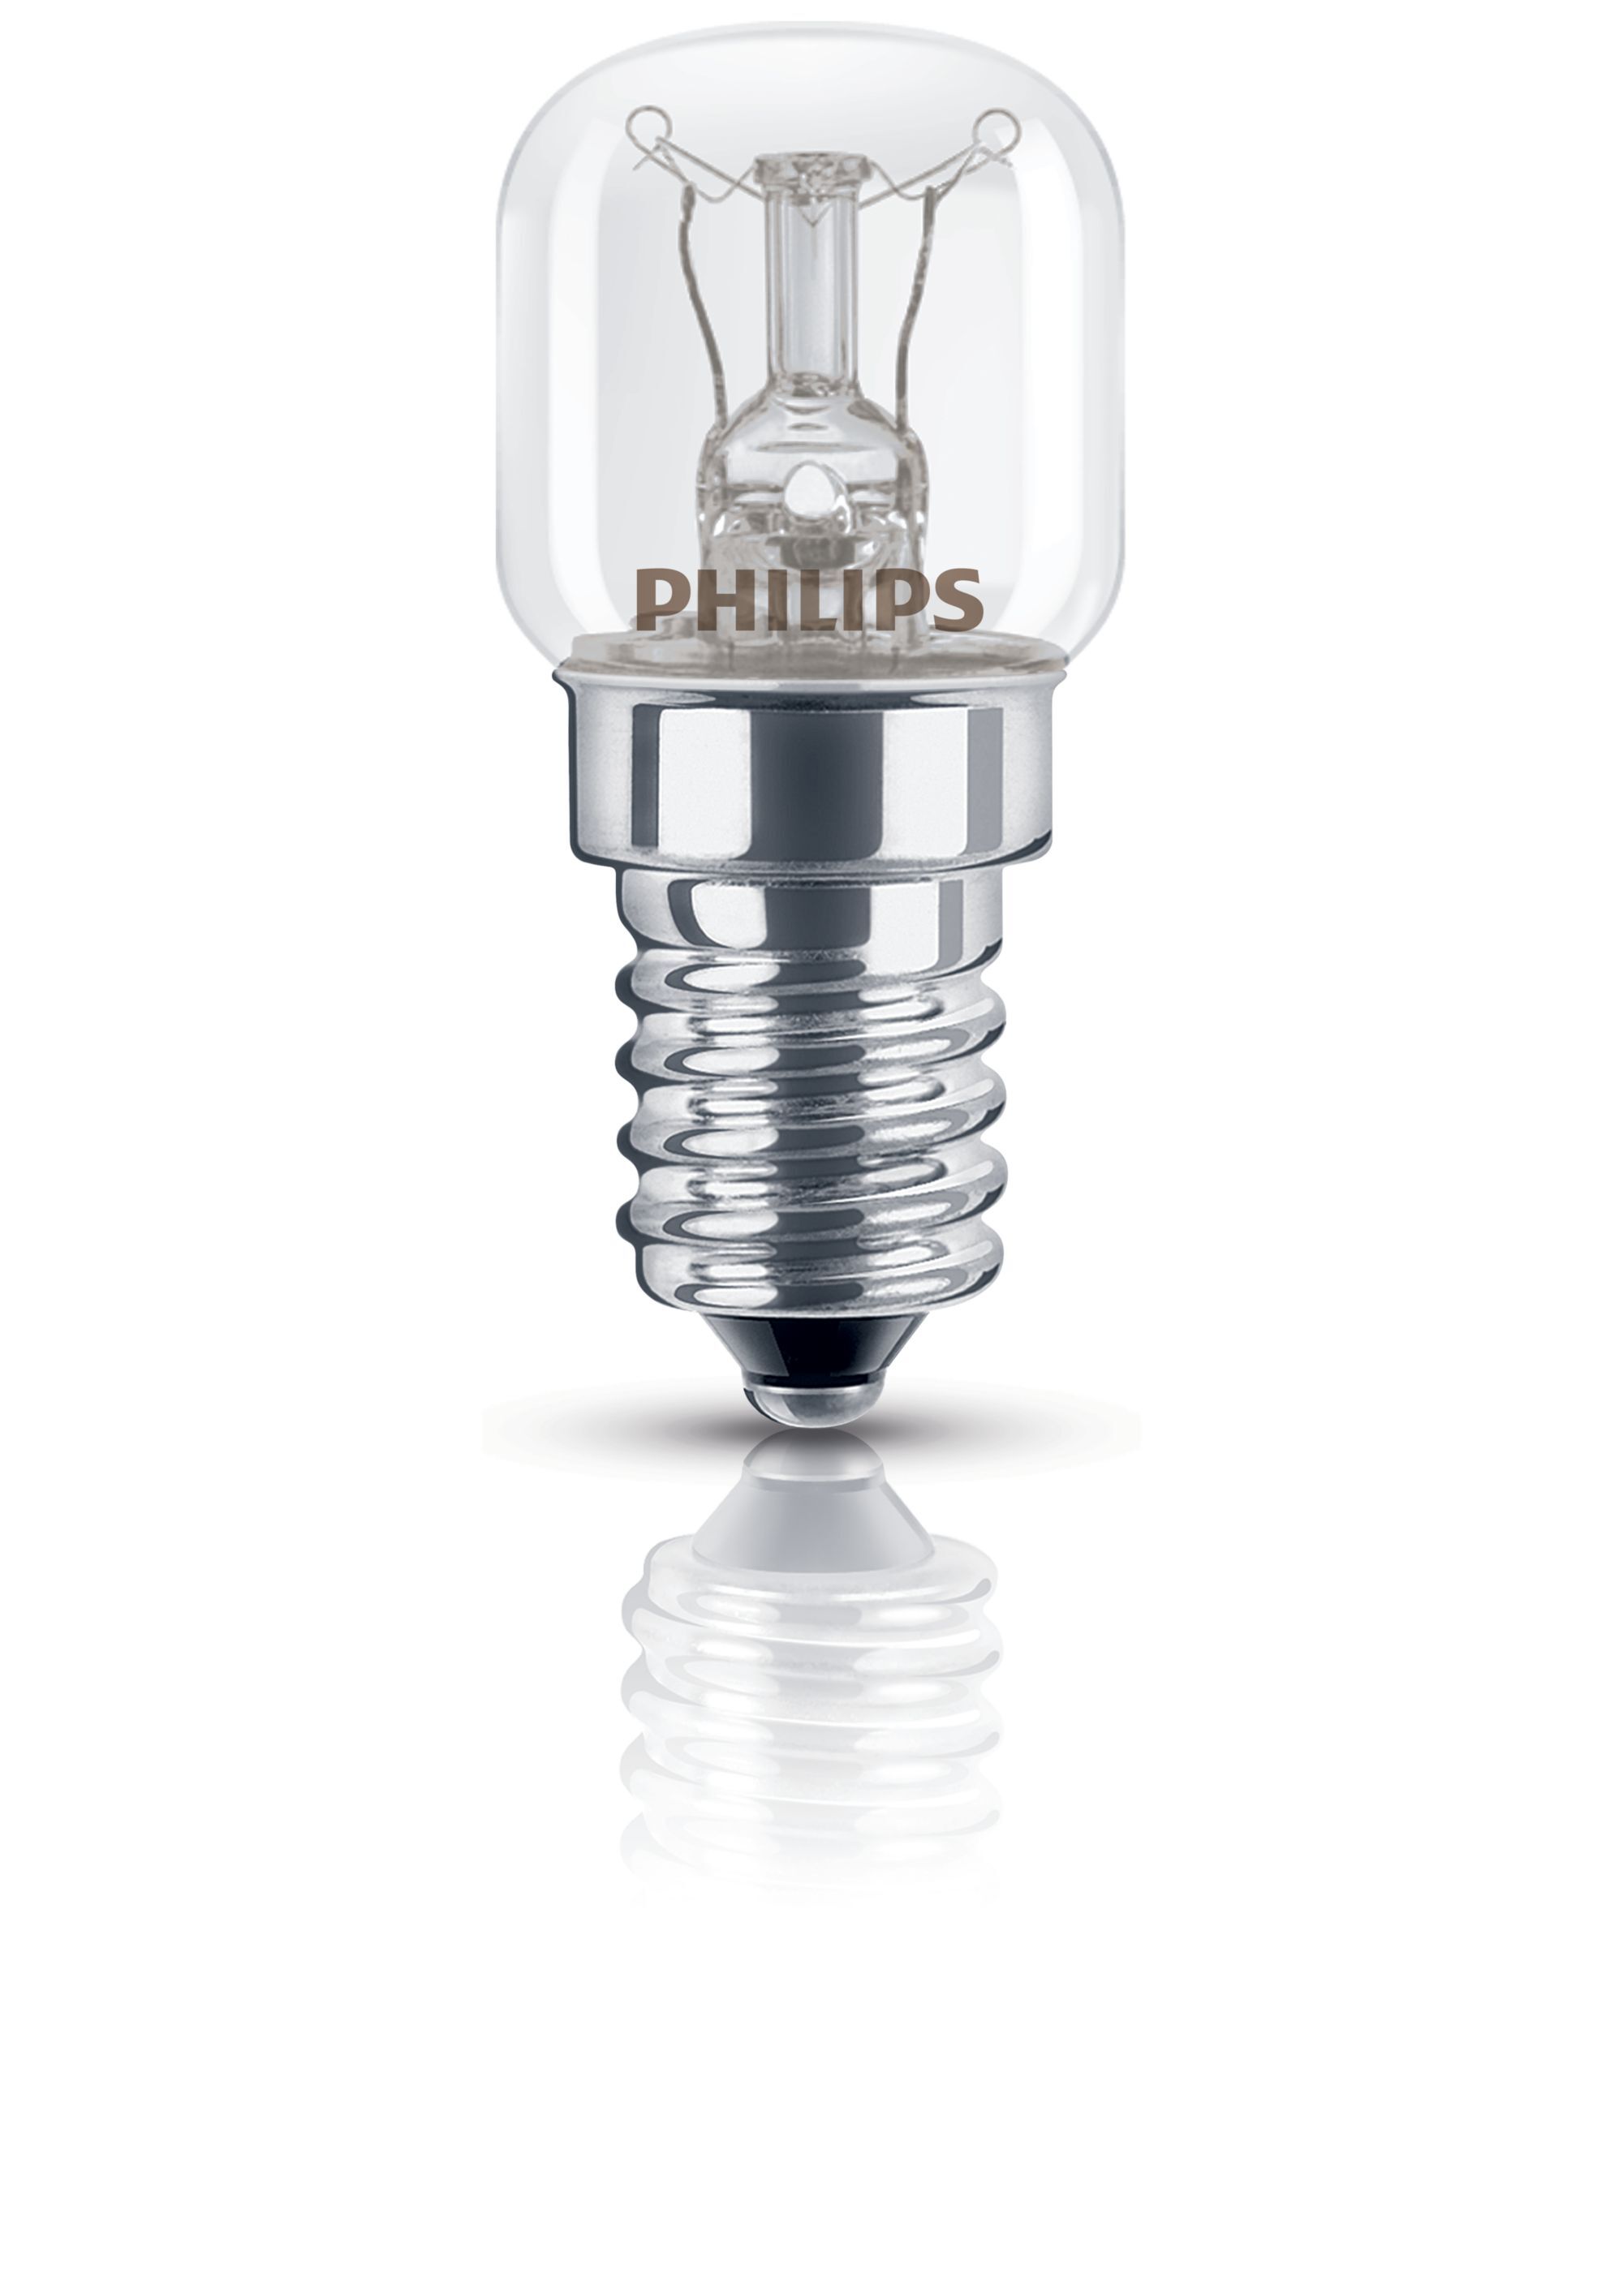 Philips Specialty 15 W E14 cap Oven Incandescent appliance bulb